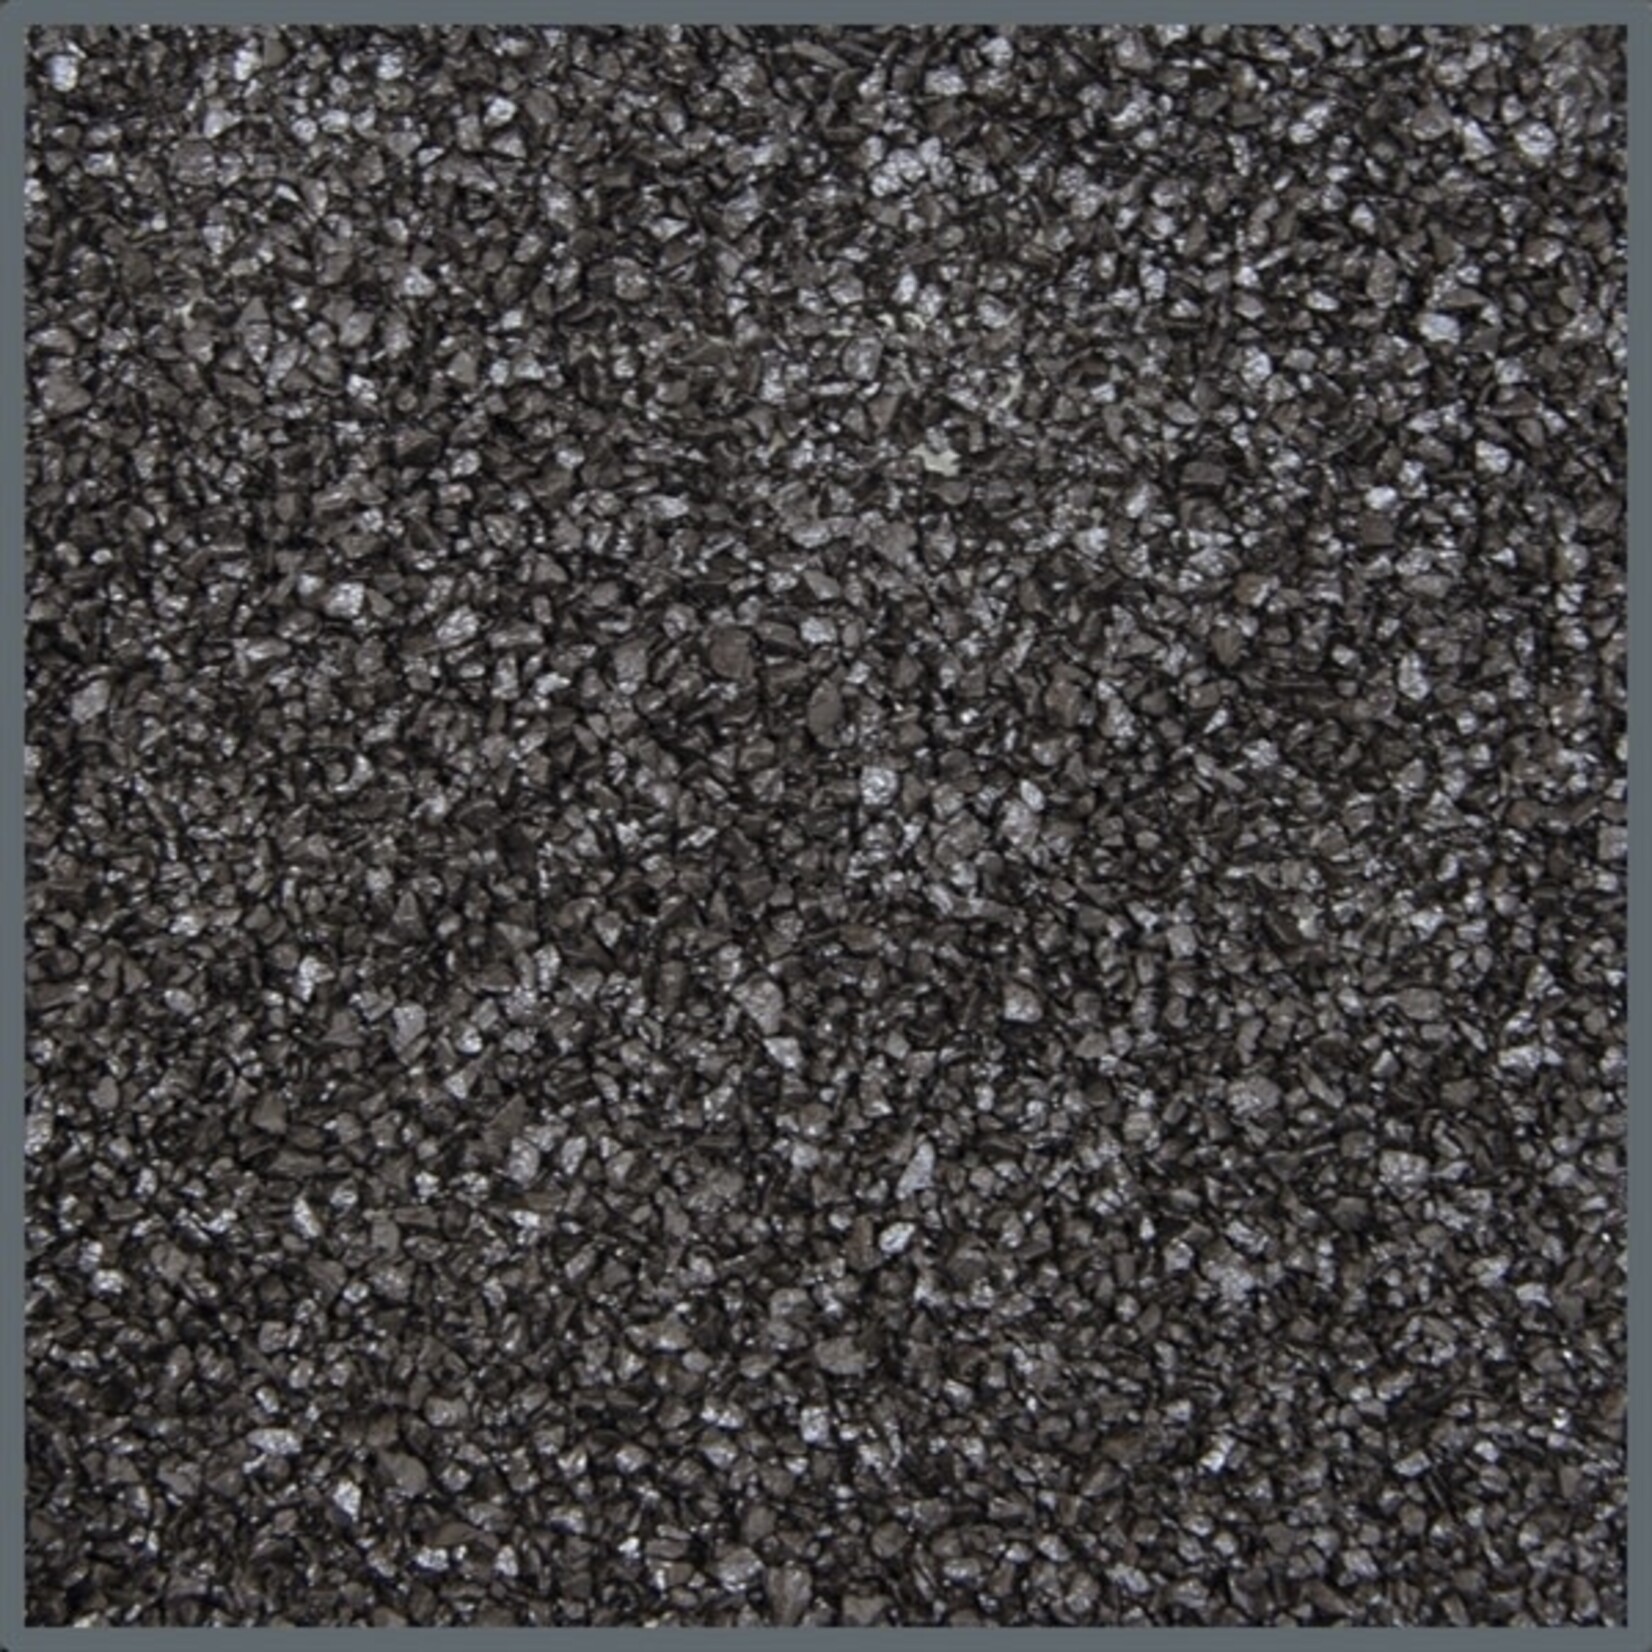 Dupla Ground colour black star 1-2 mm 5 kg